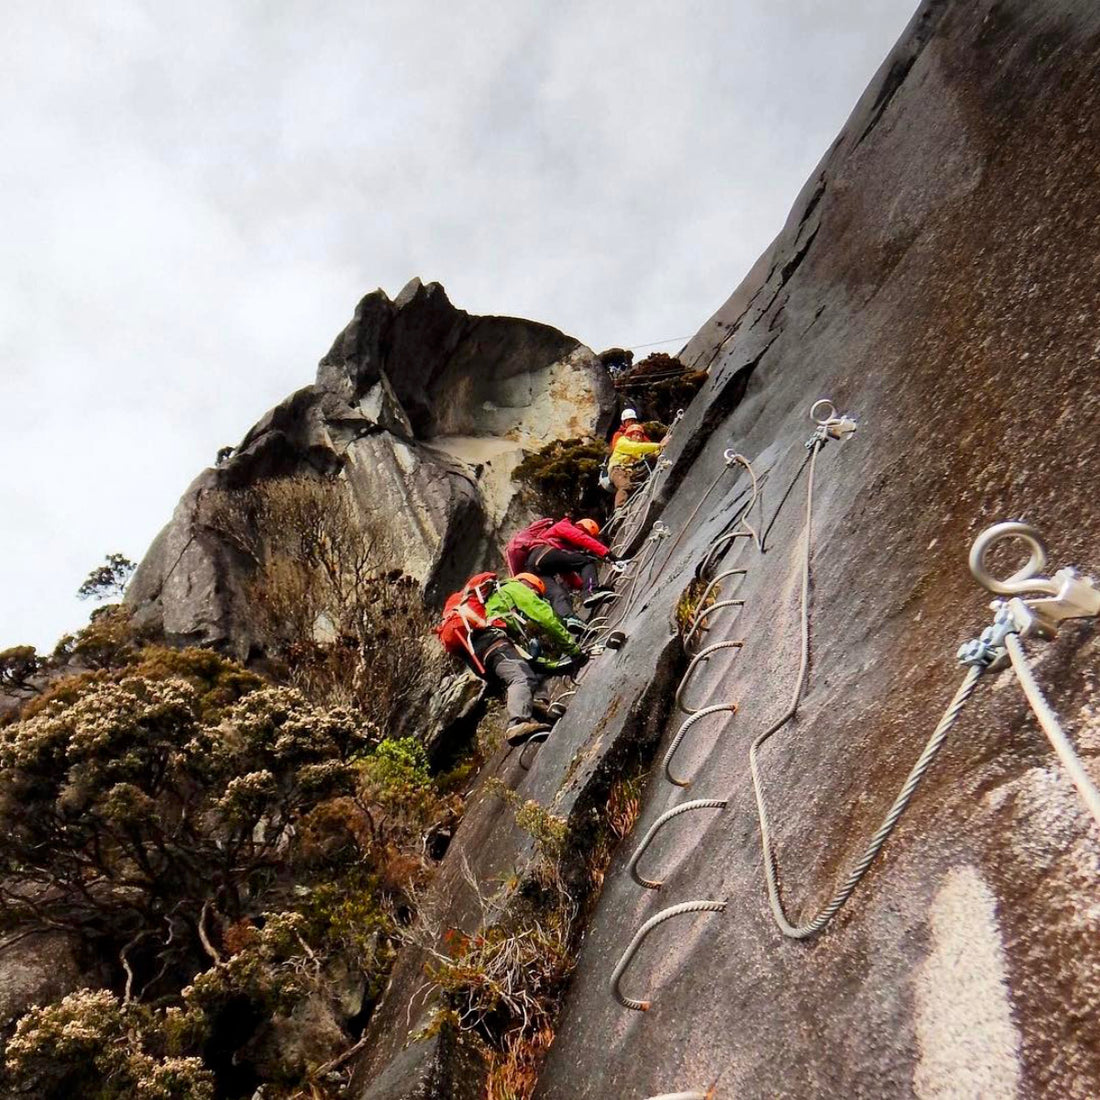 DIY 2D1N Mount Kinabalu Climb Via Ferrata Low&